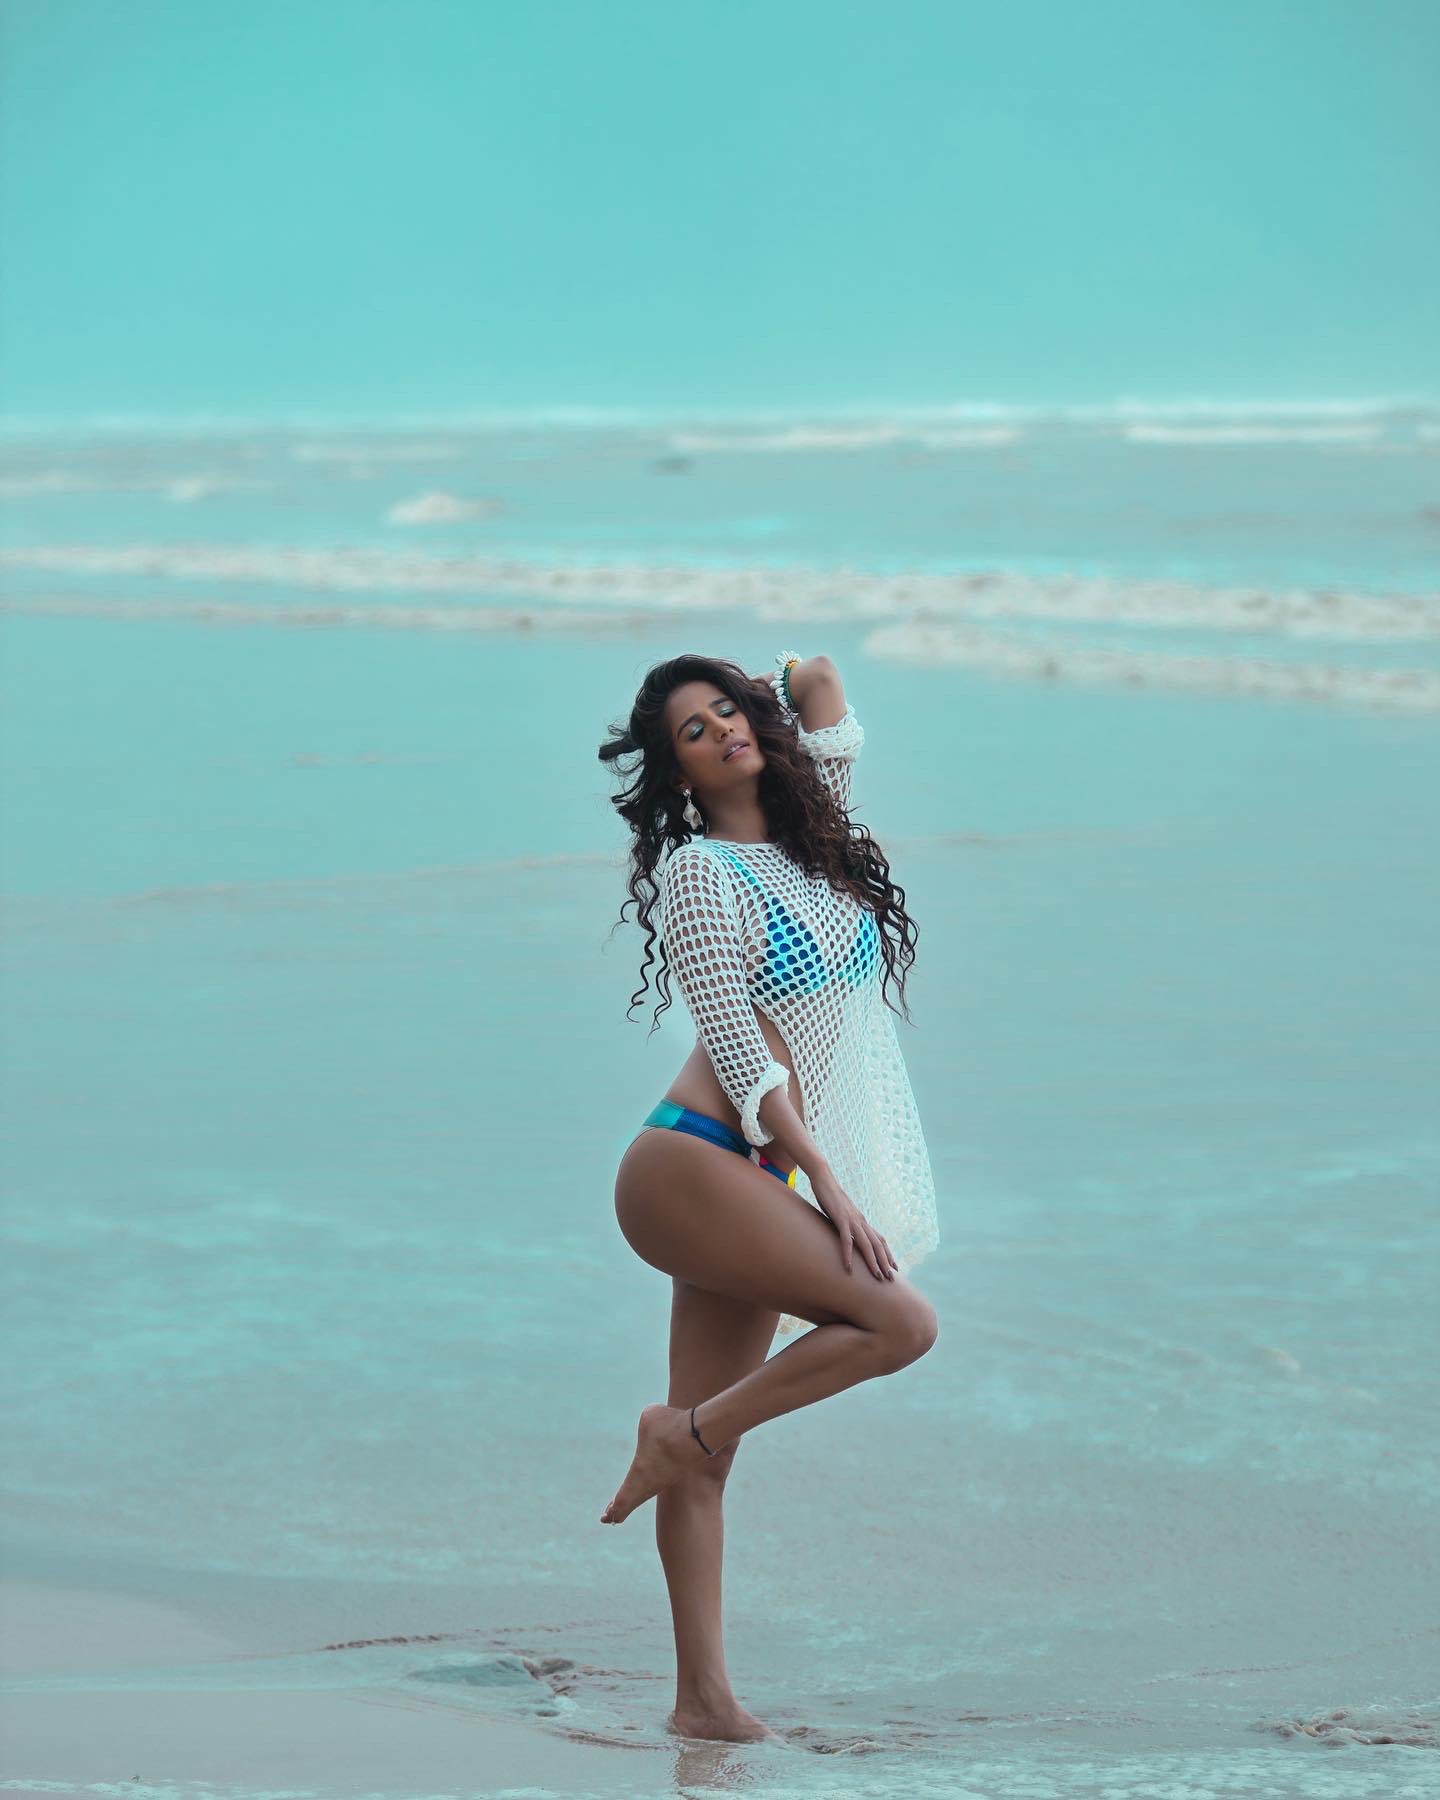 Woman doing Vajrasana pose at beach stock photo (238416) - YouWorkForThem